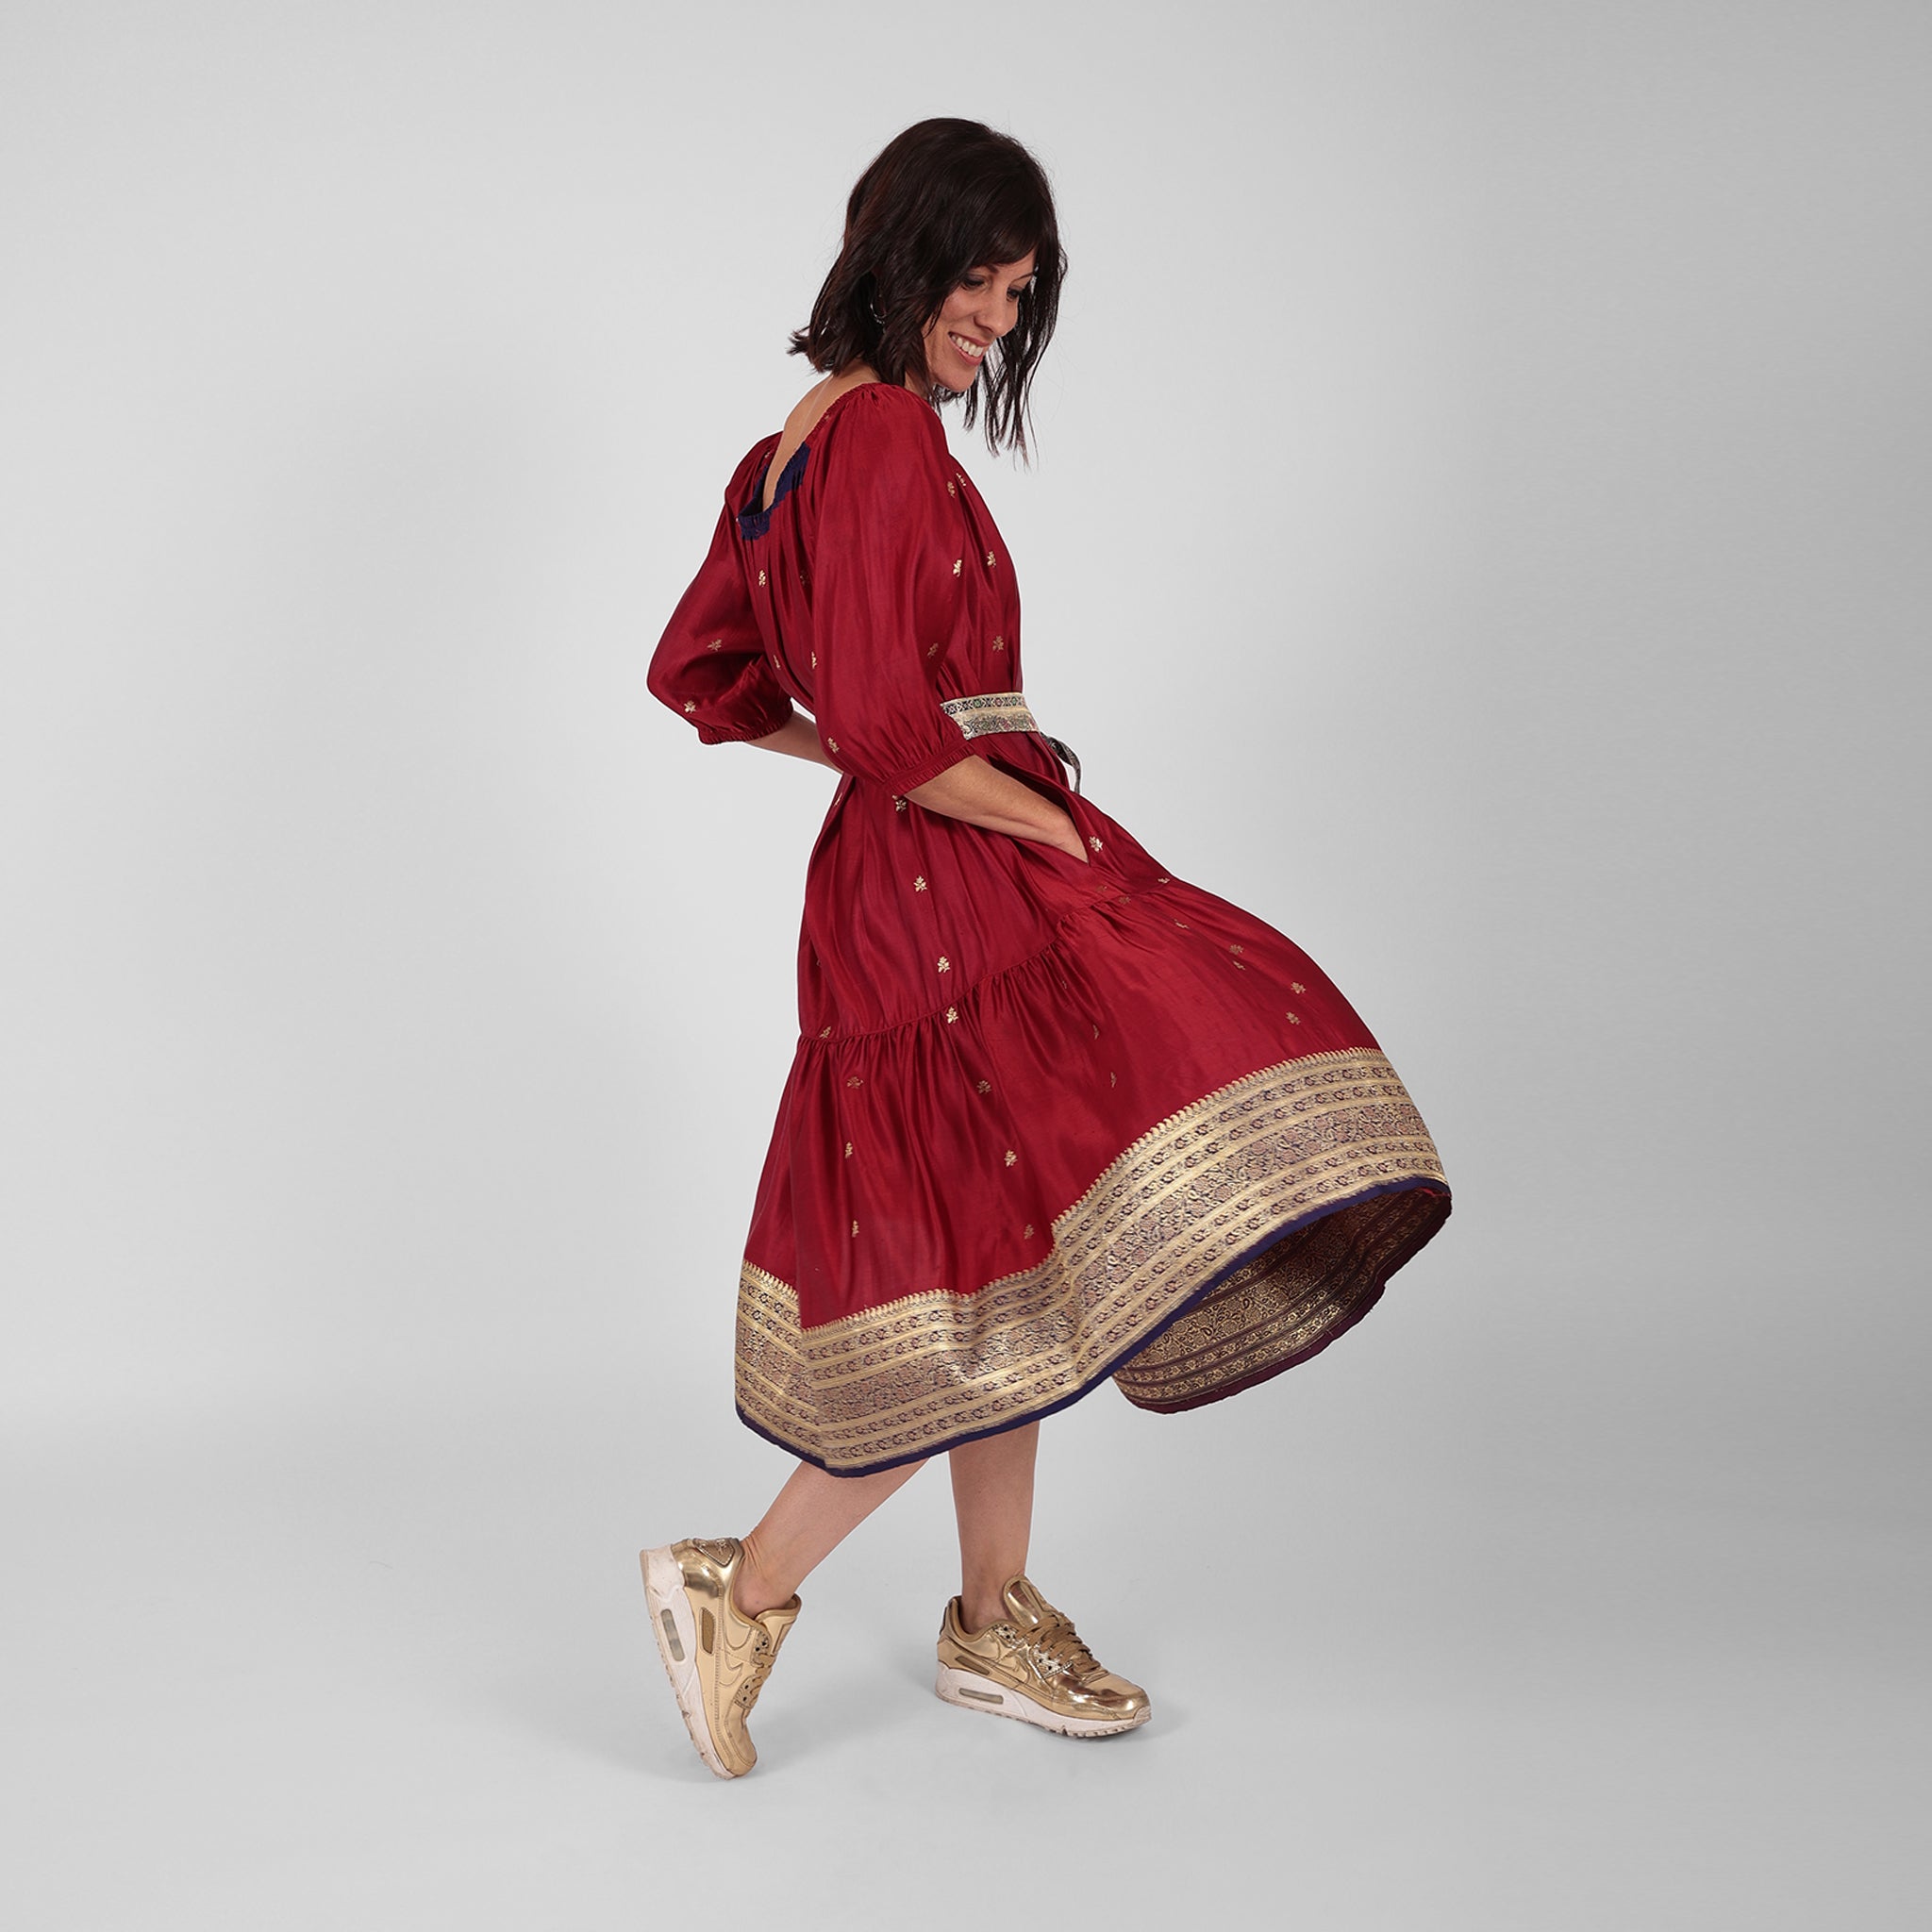 Ausus Ruby Red Vintage silk sari maxi dress